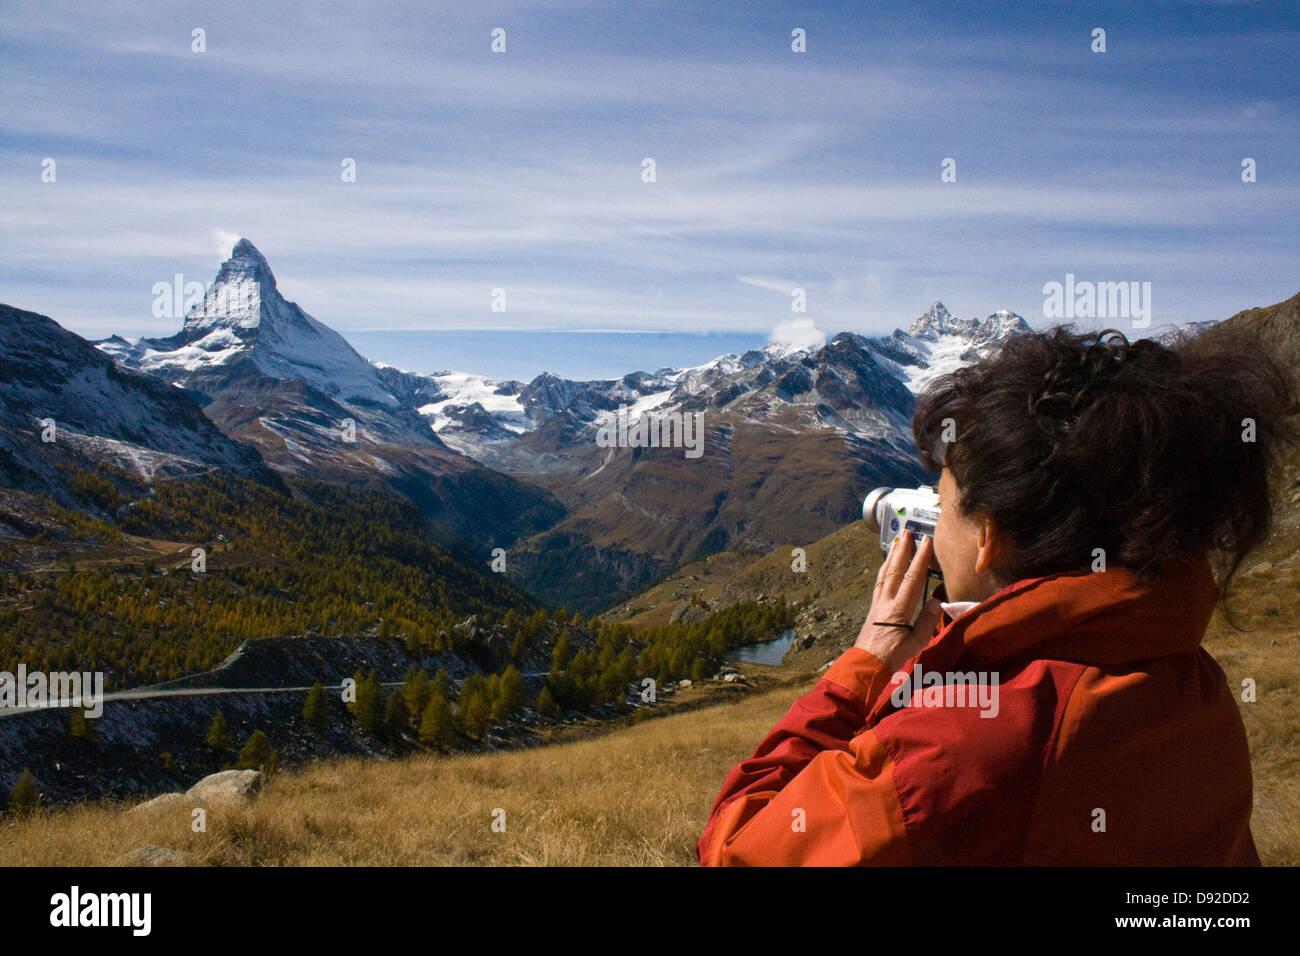 Woman in red jacket taking a picture of Matterhorn- Frau in roter Jacke richtet ihre Video-Kamera auf das Matterhorn Stock Photo